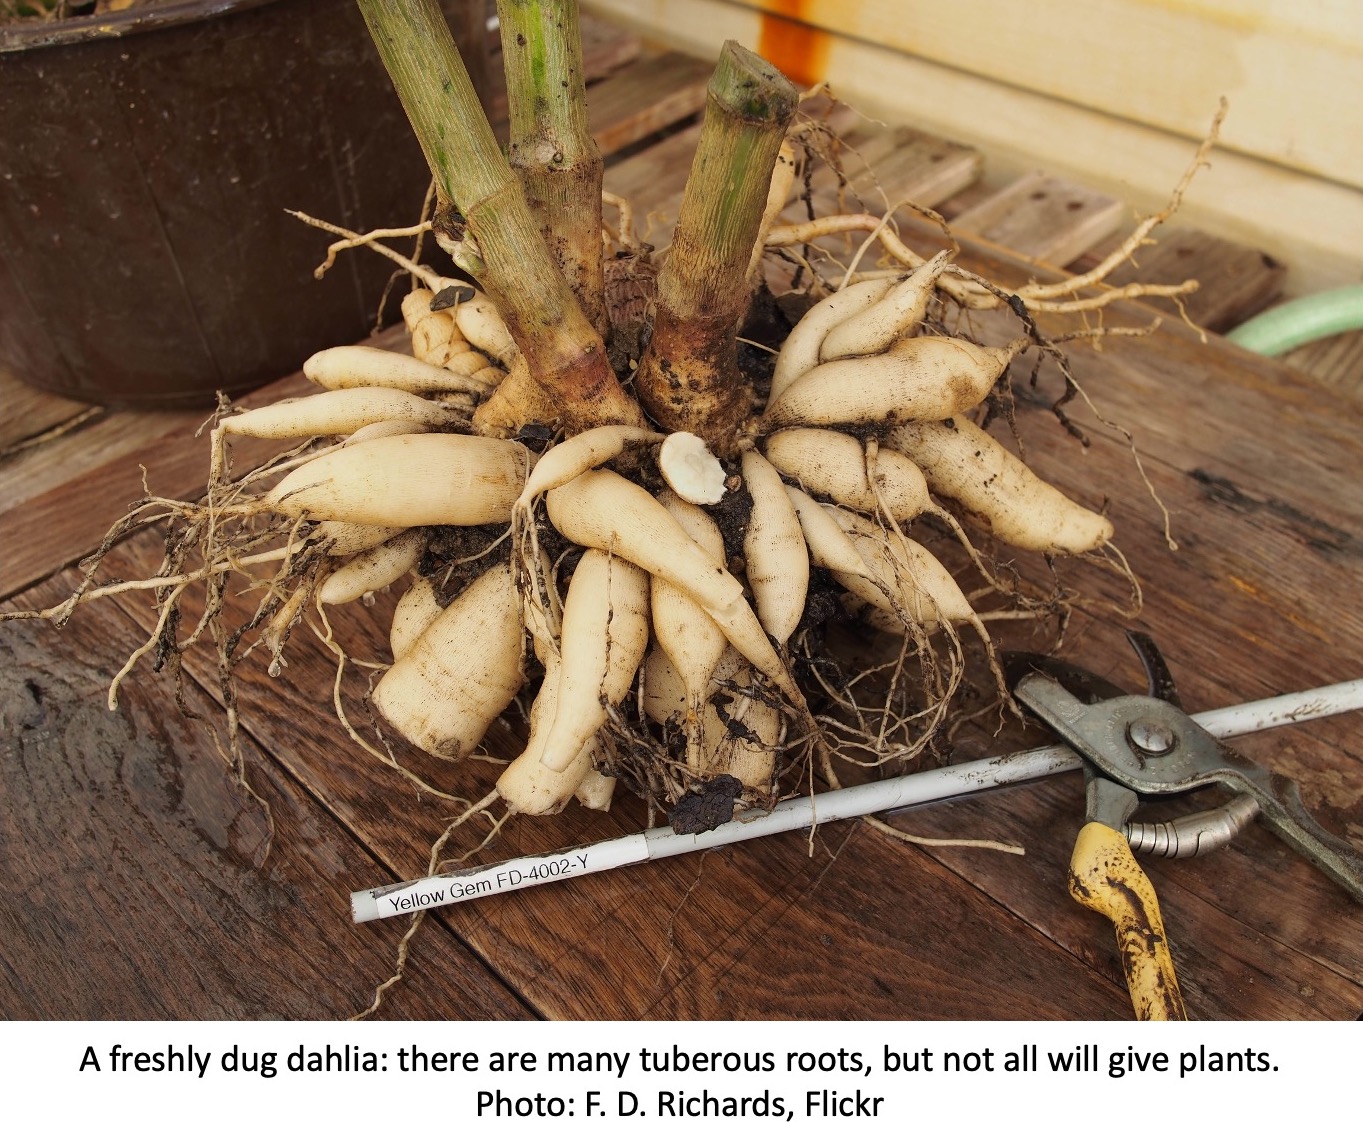 Freshing dug dahlia showing multiple tuberous roots.